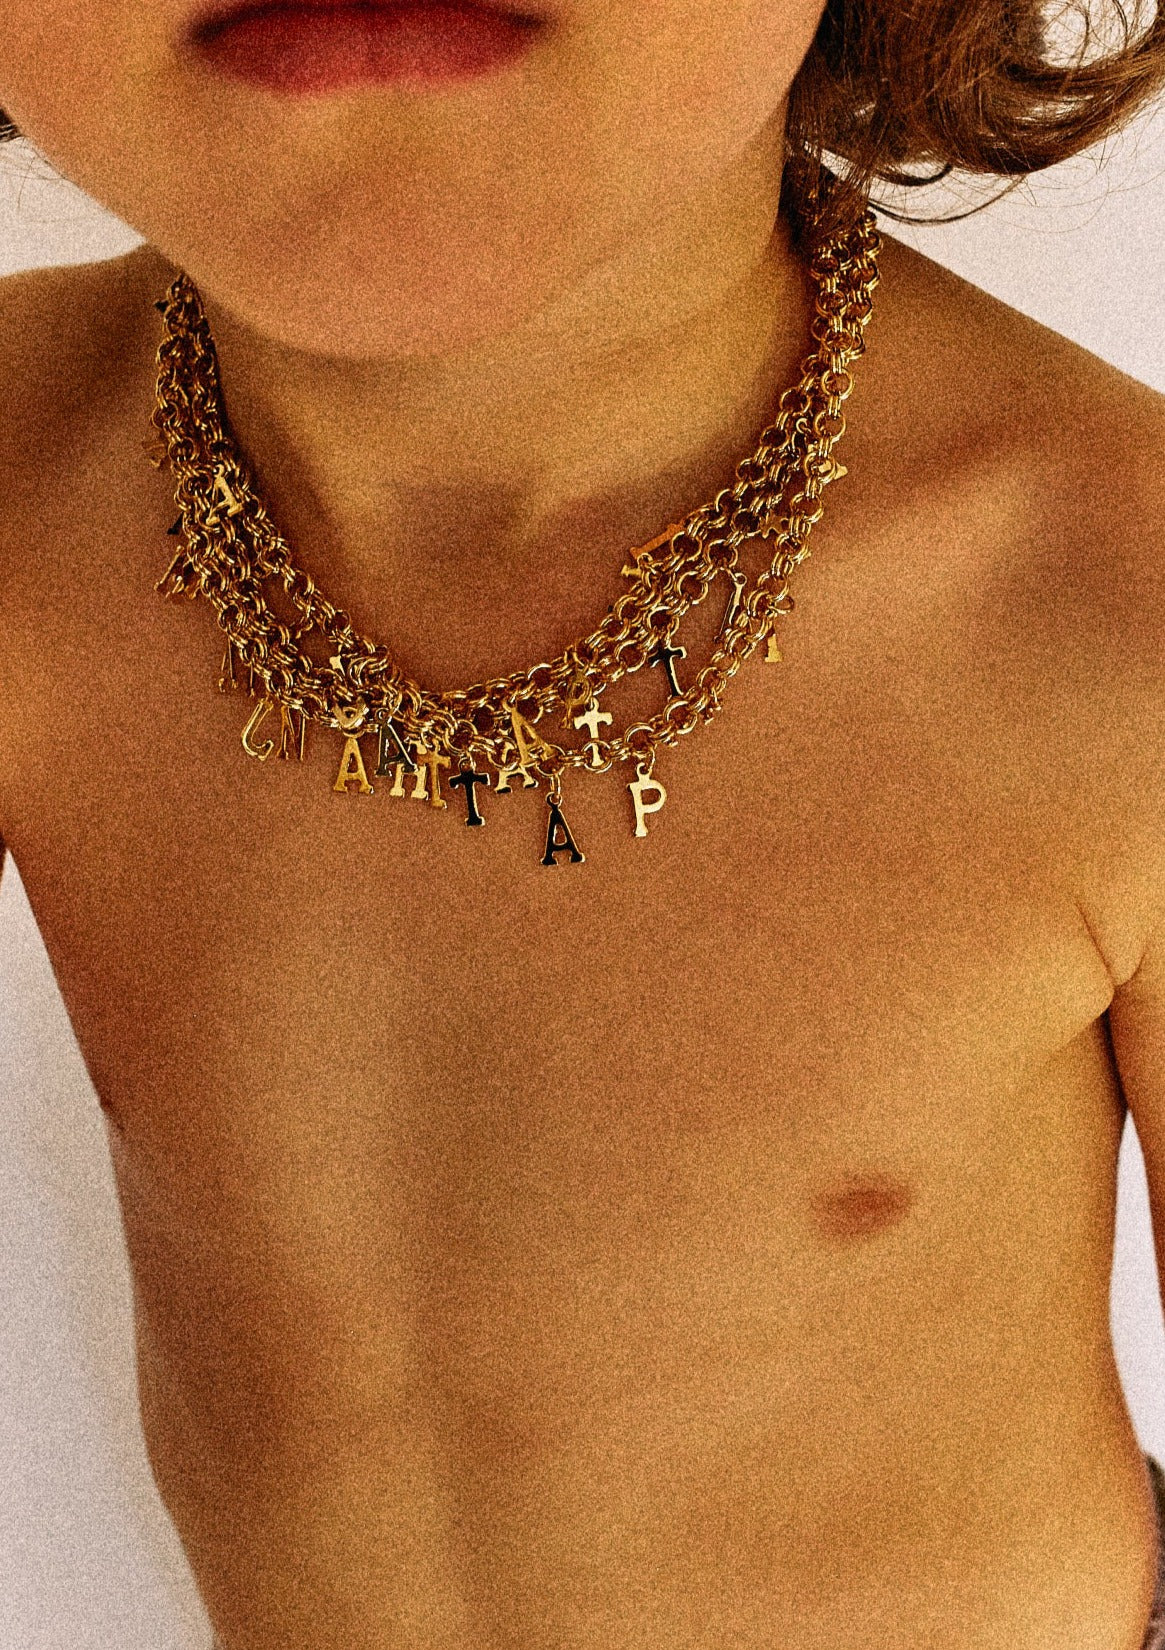 Weird Words necklaces